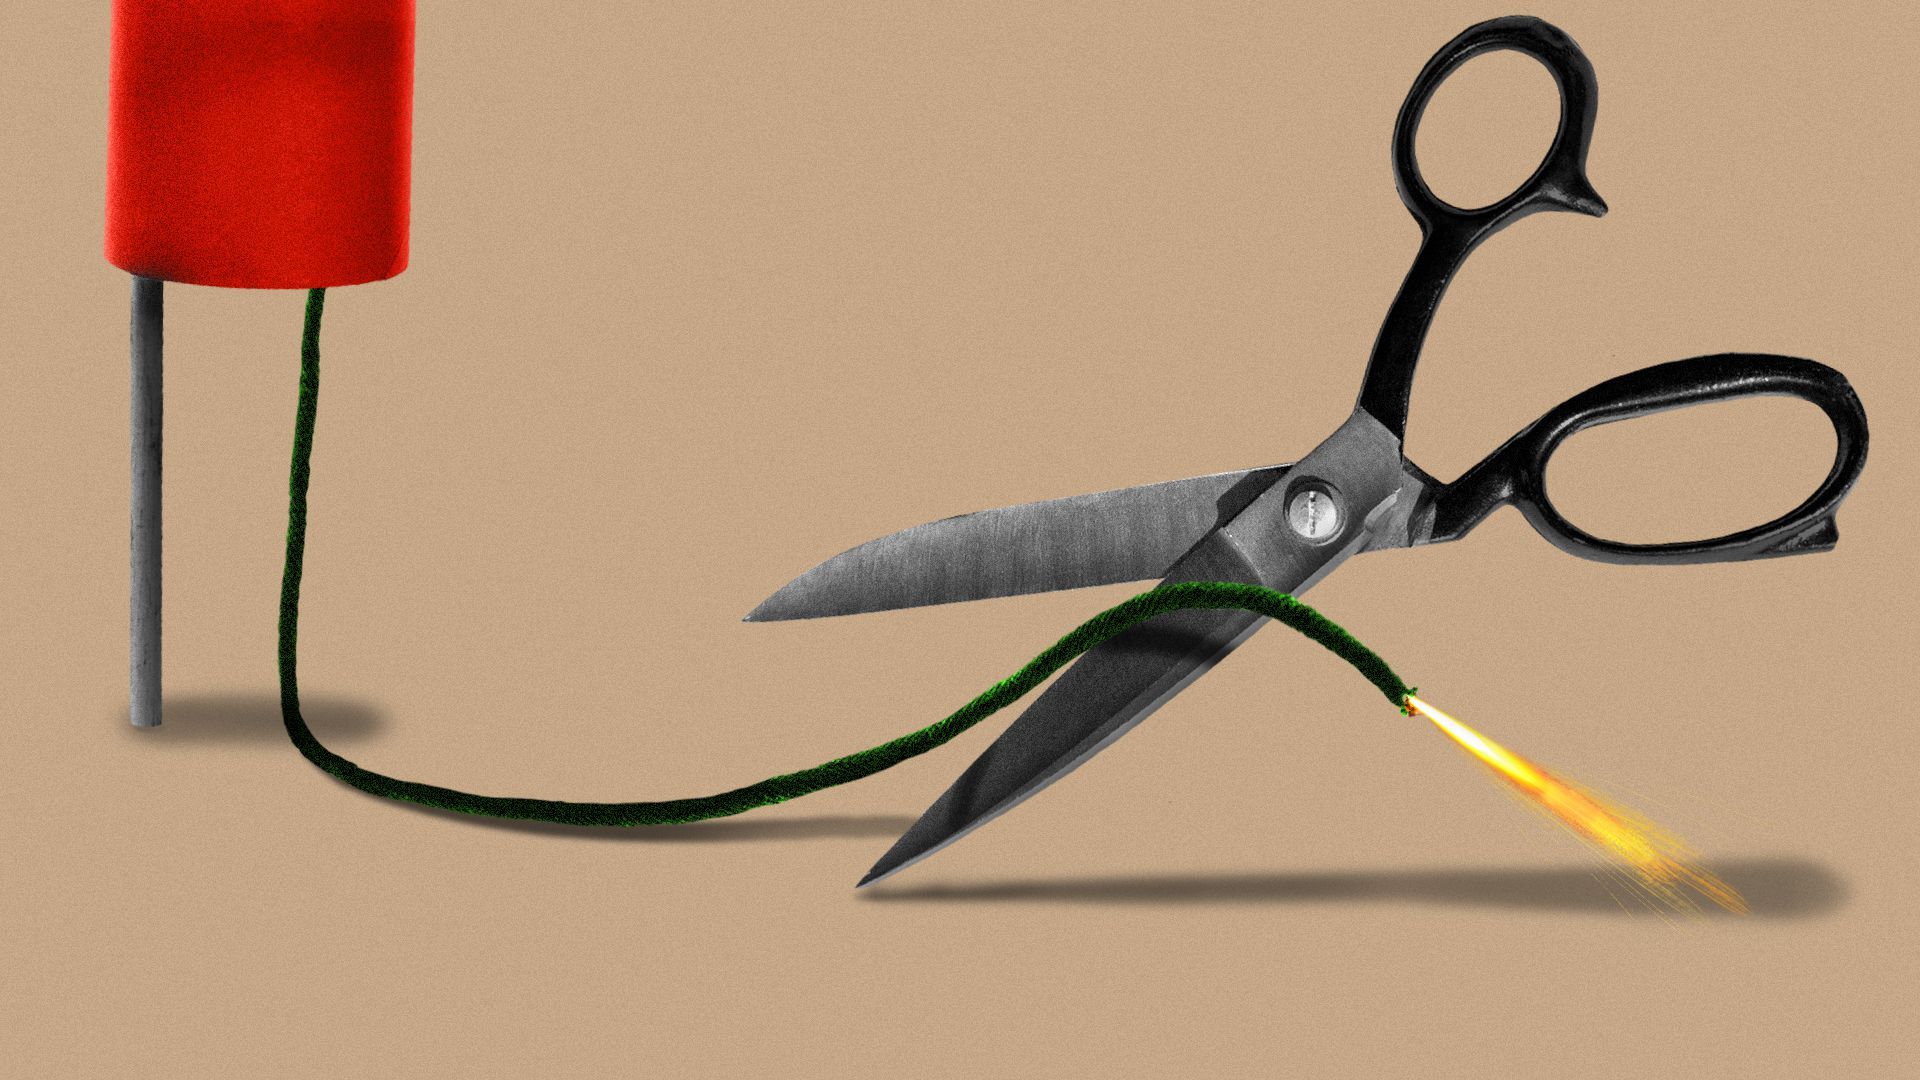 Illustration of scissors cutting a lit fuse on a firecracker.